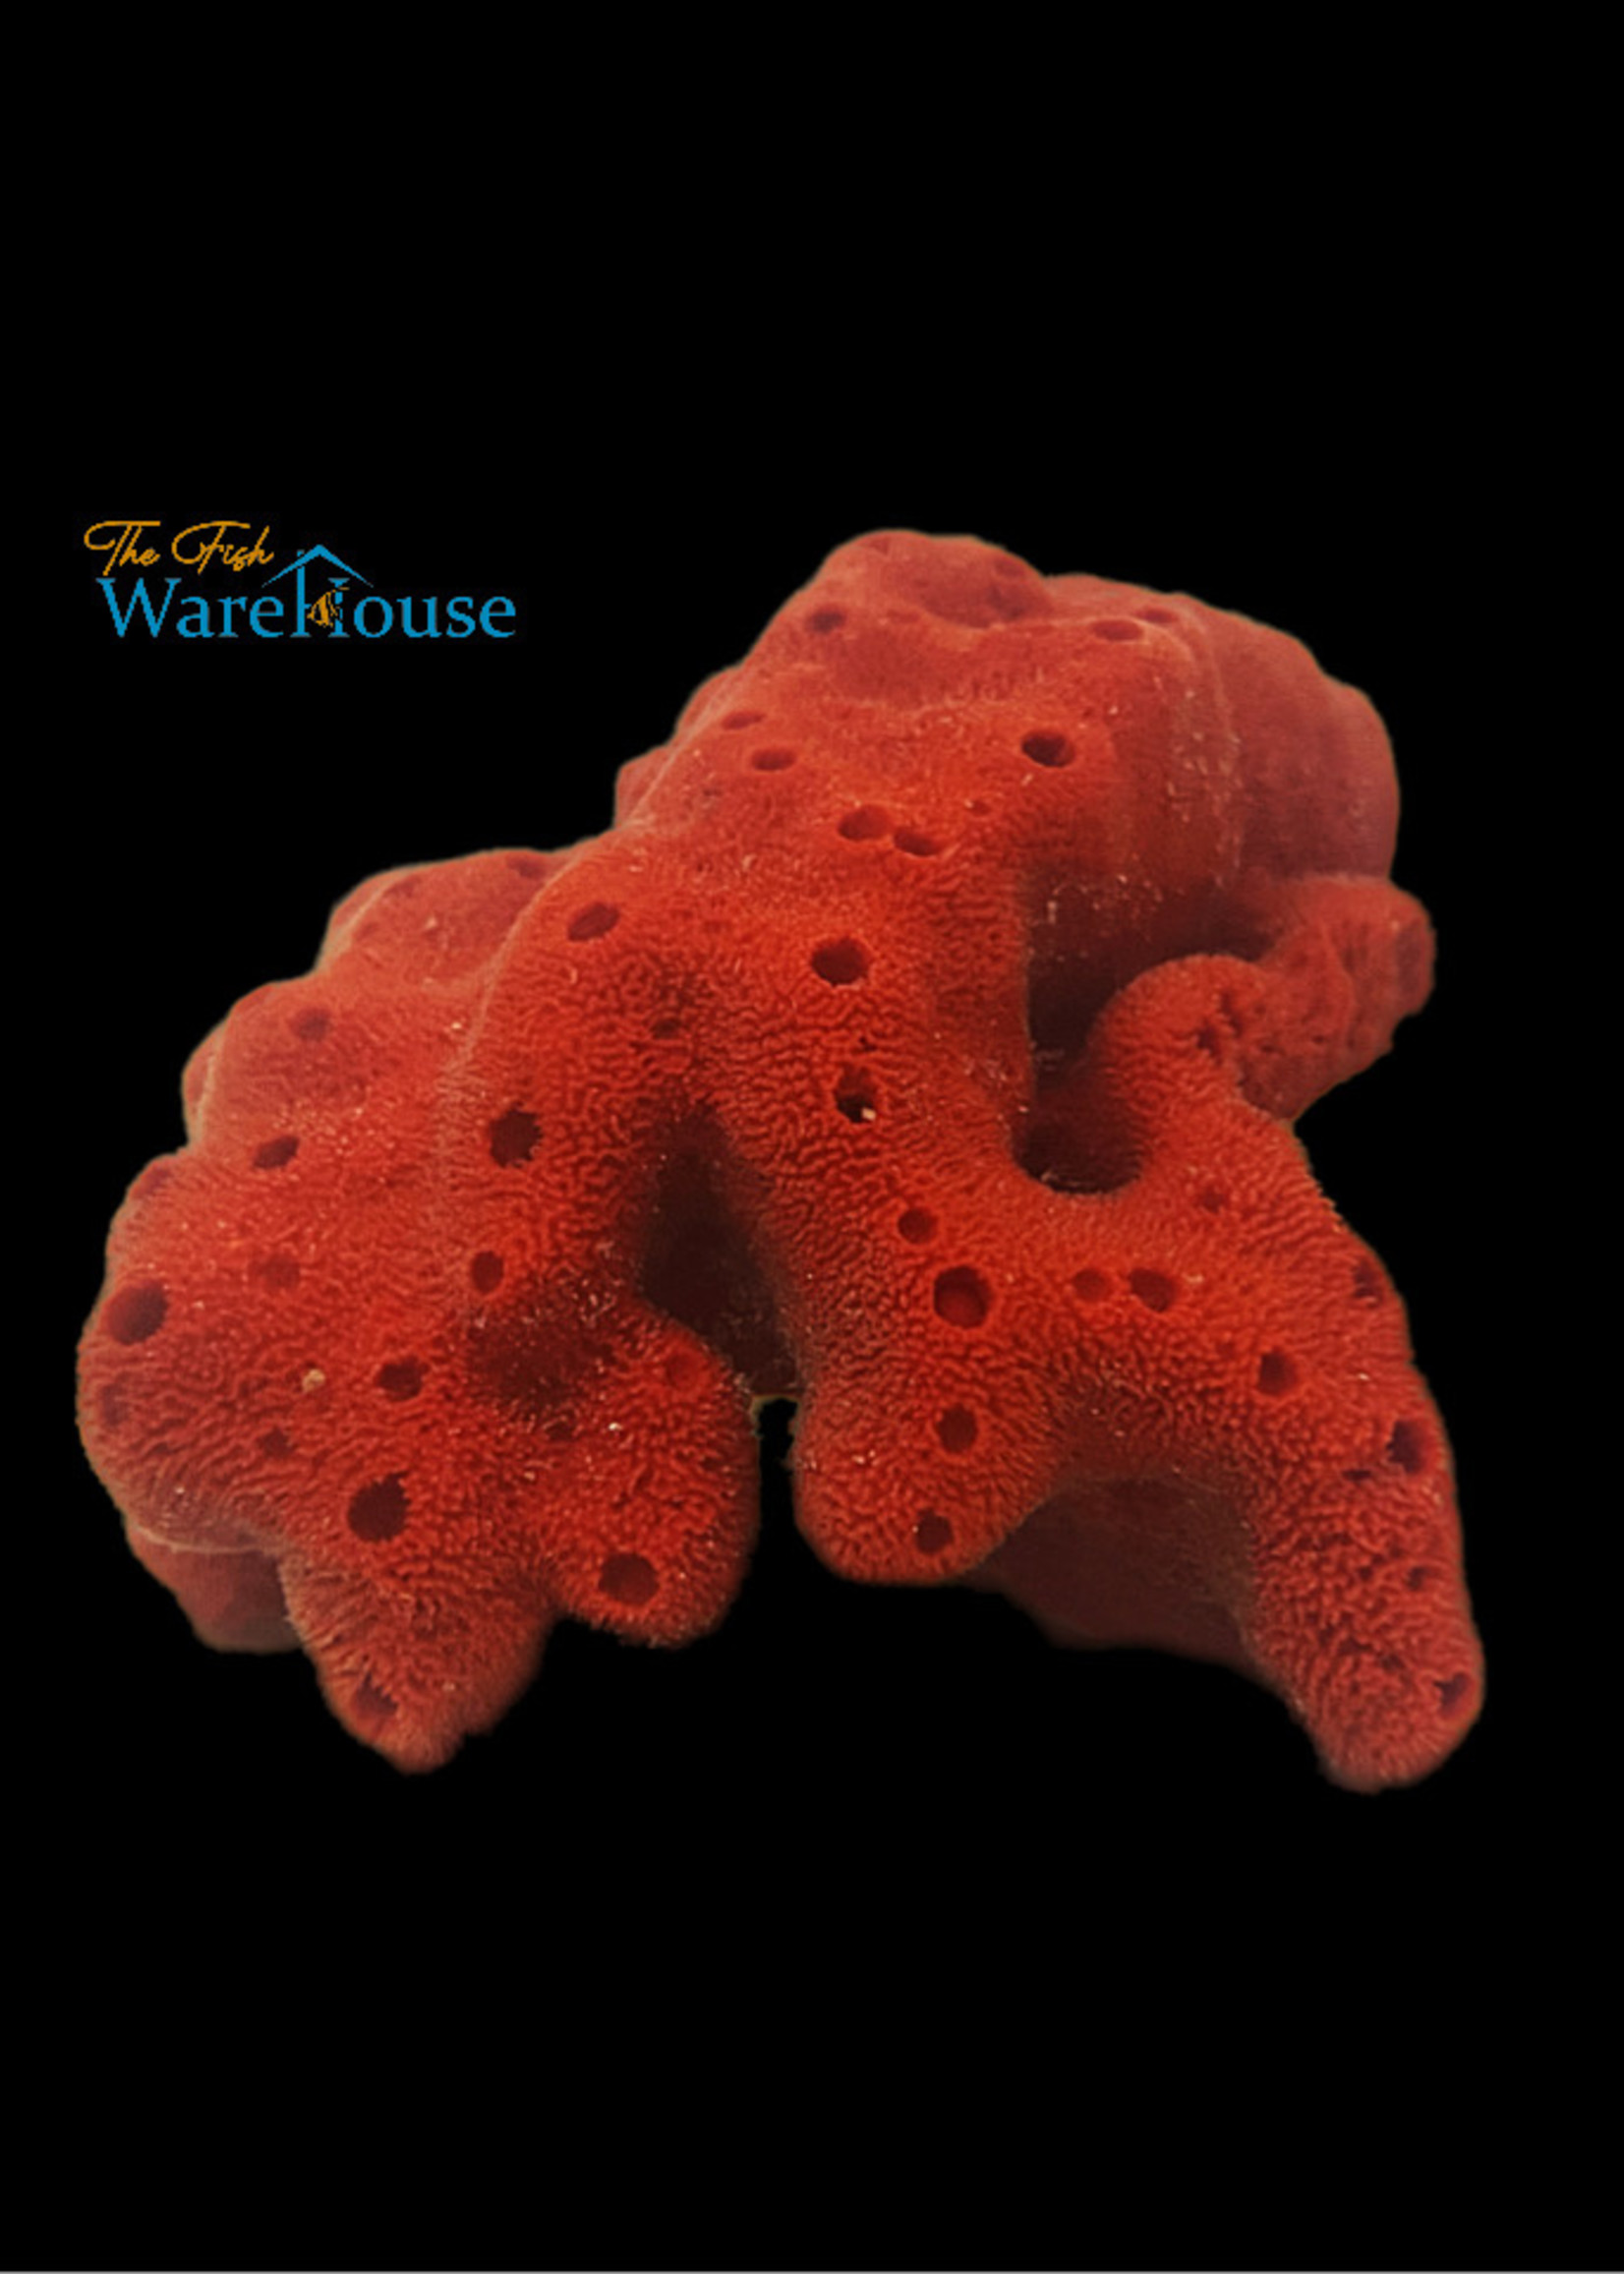 Red Ball Sponge (Pseudaxinella lunaecharta)